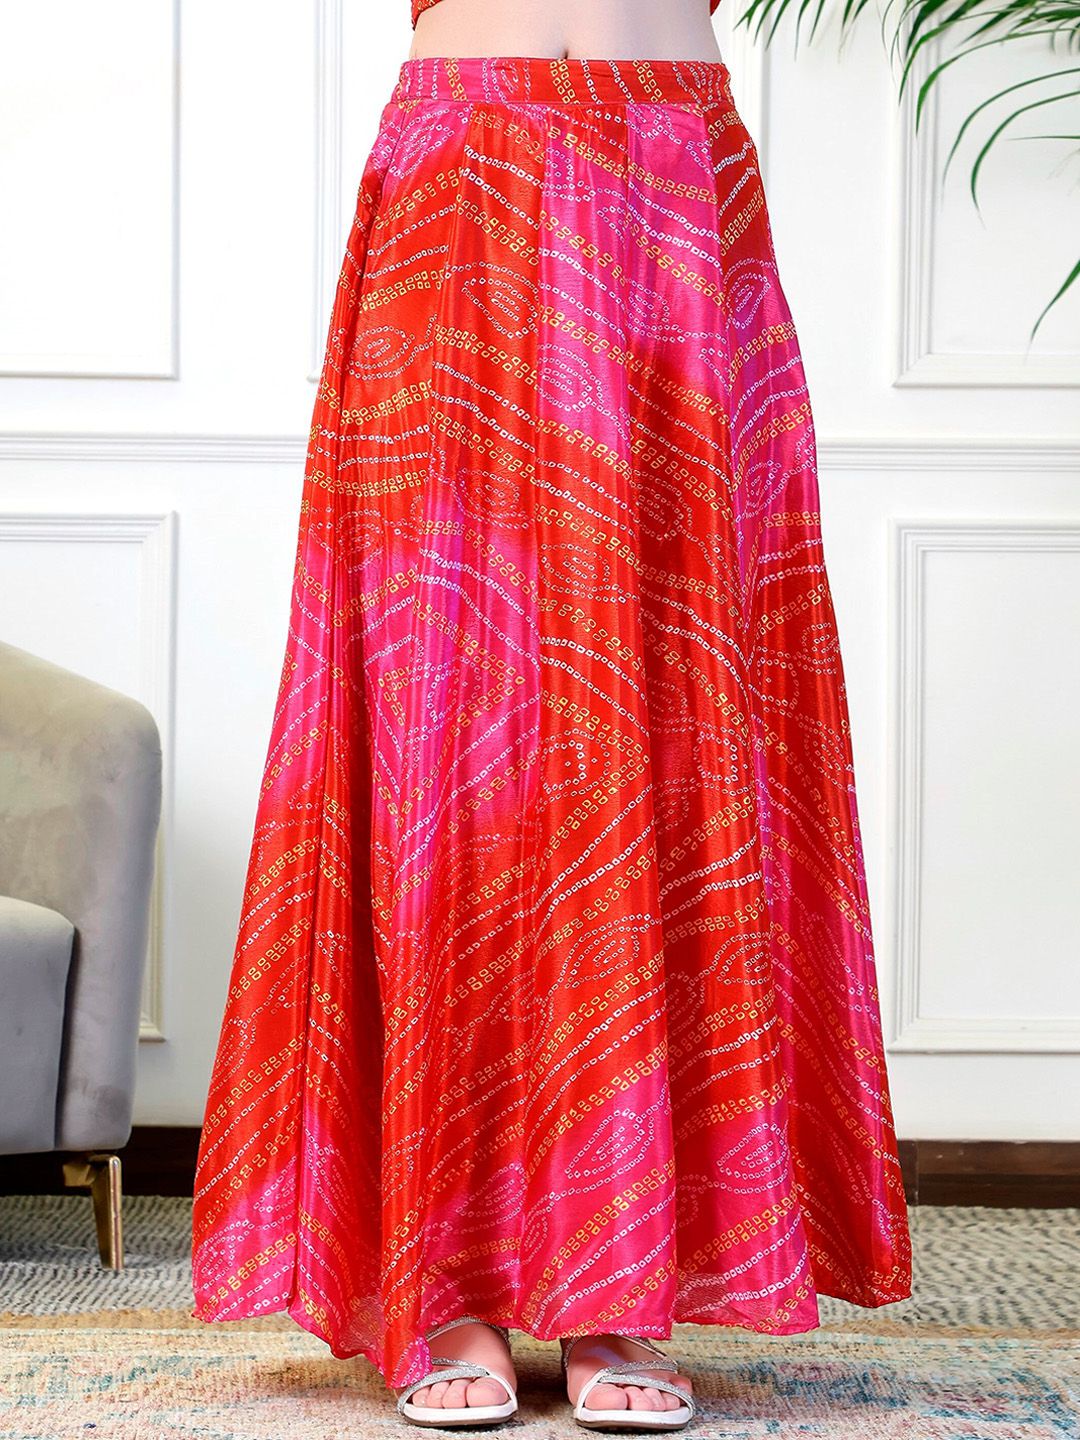 NEUDIS Tie and Dye Printed Flared Maxi Lehenga Skirt Price in India